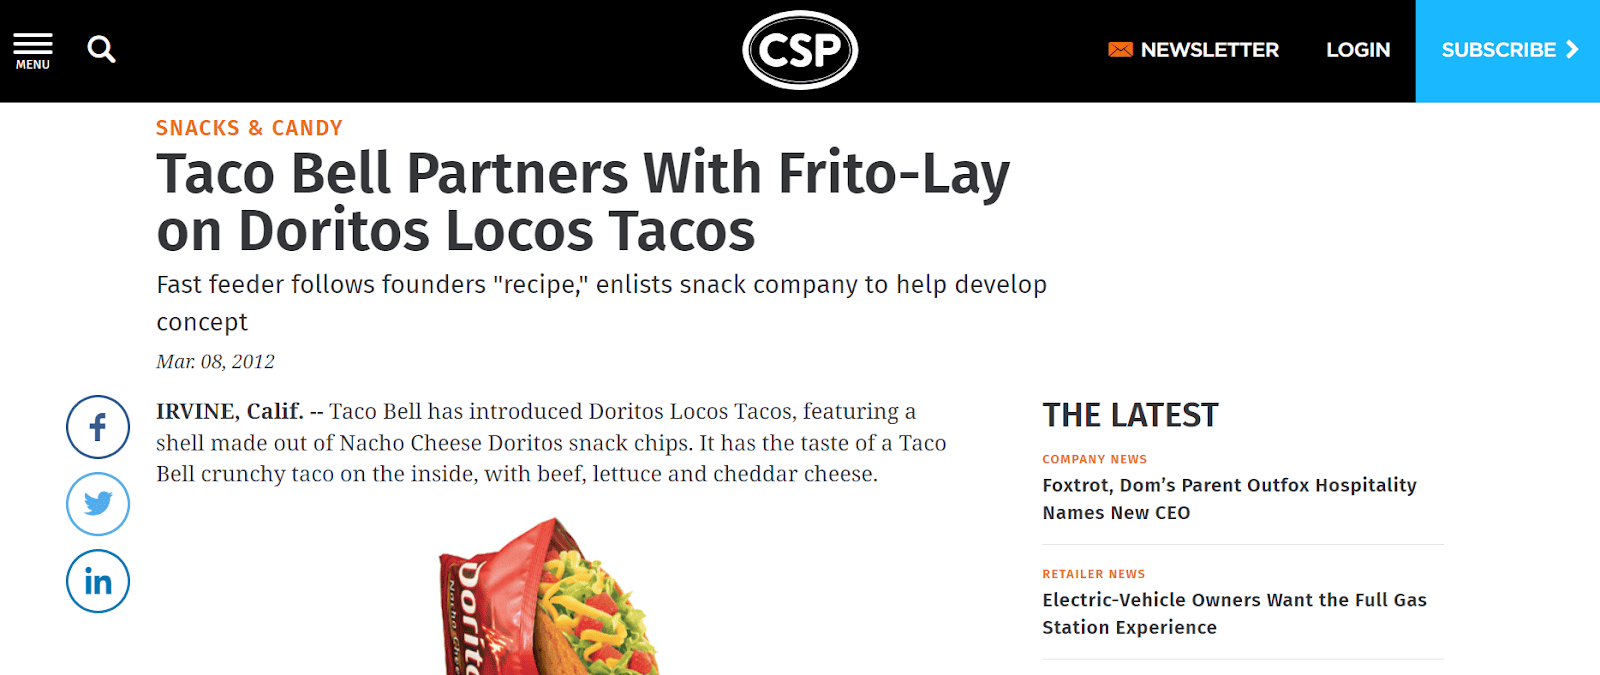 plan de marketing de parteneriat taco bell și doritos